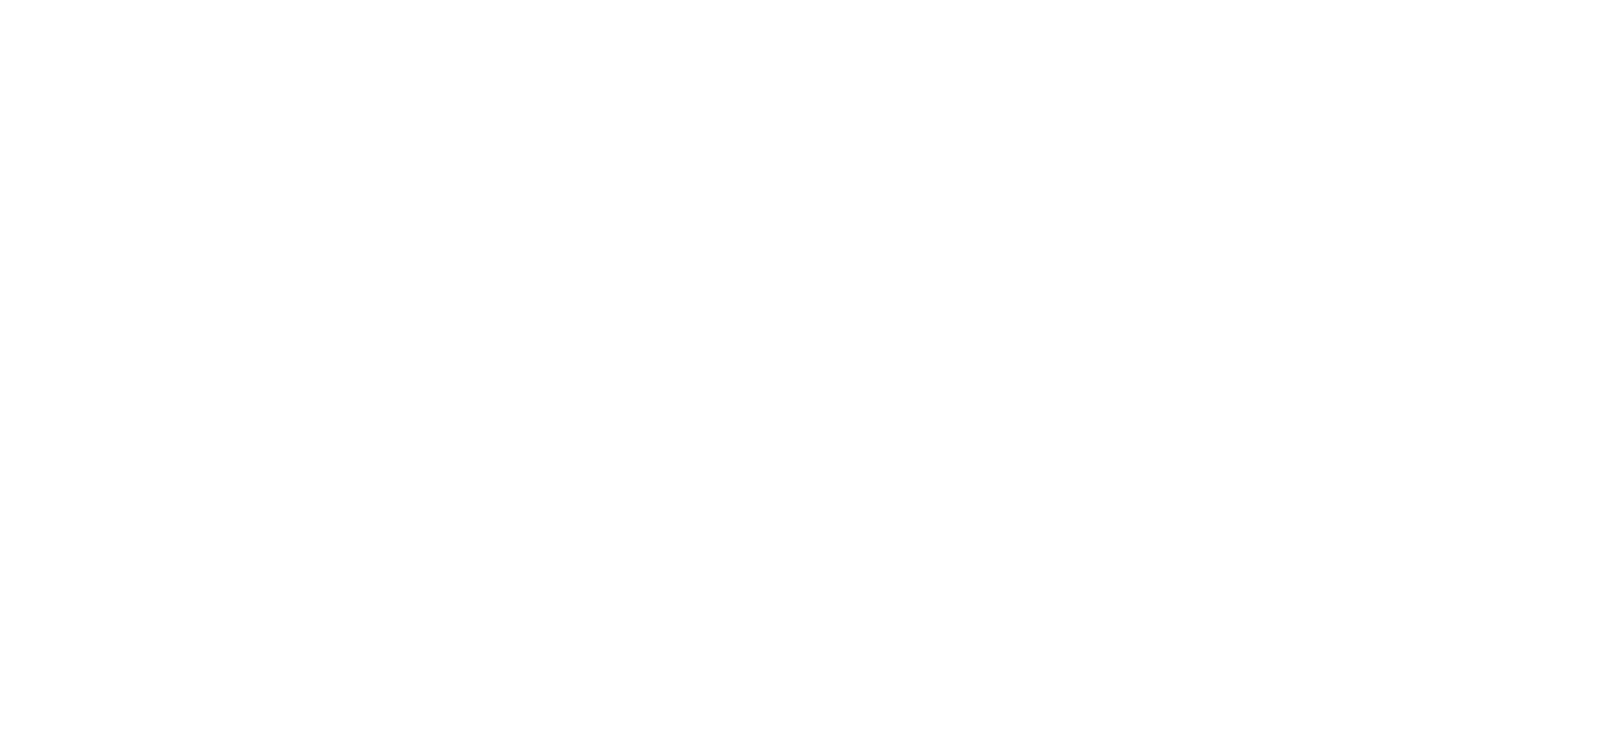 Logo Cap Enfants blanc